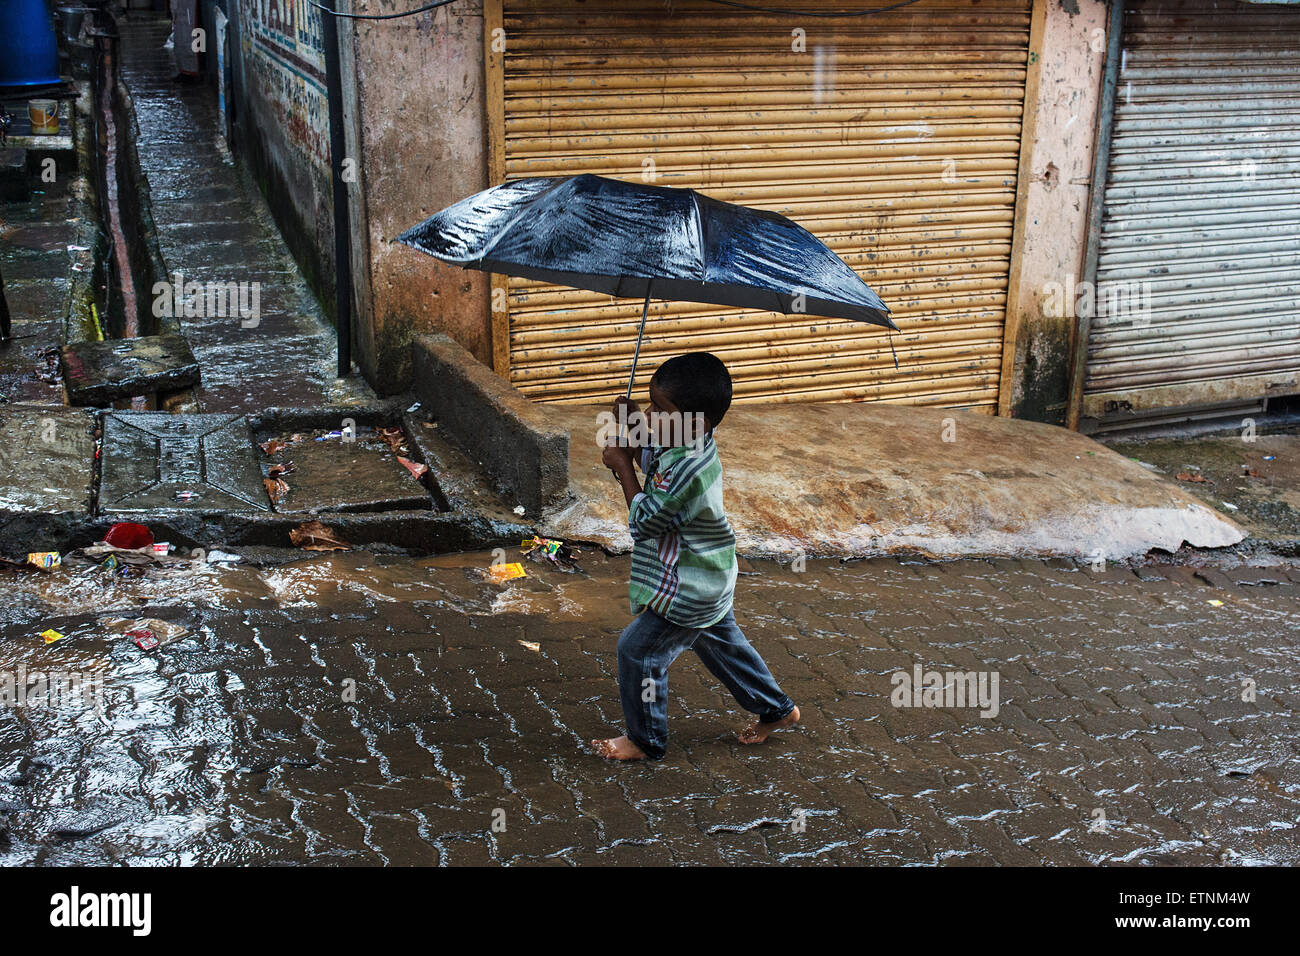 A young boy with umbrella in monsoon rain in Mumbai, India Stock Photo